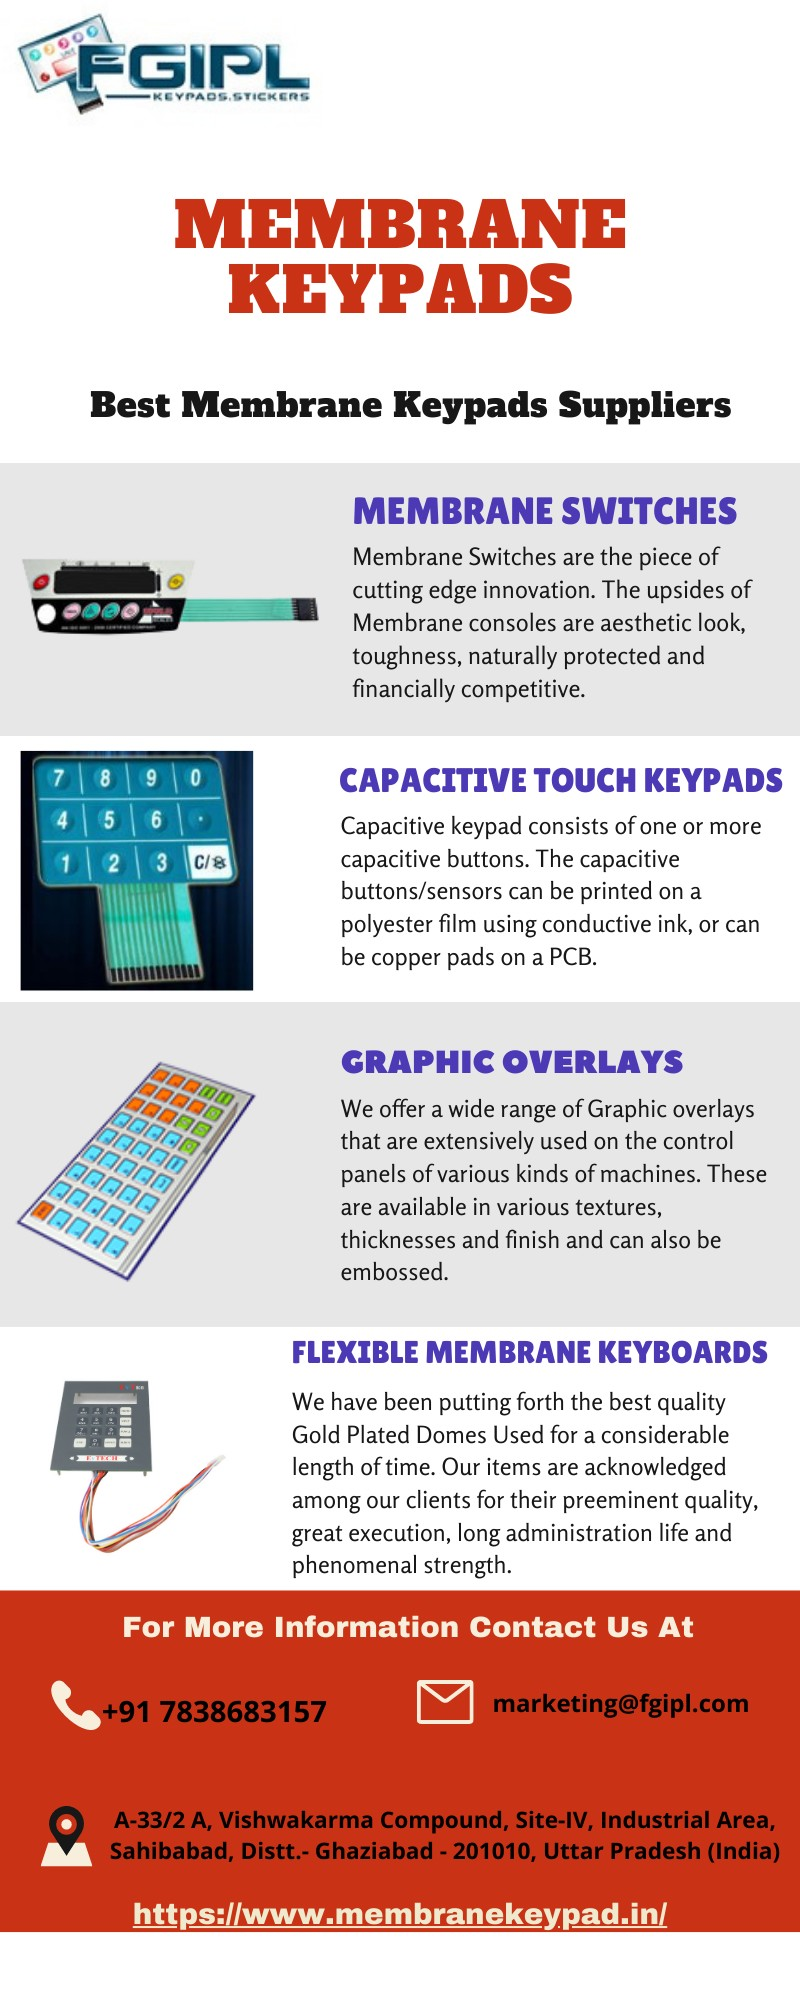 Best Membrane Keypads Suppliers